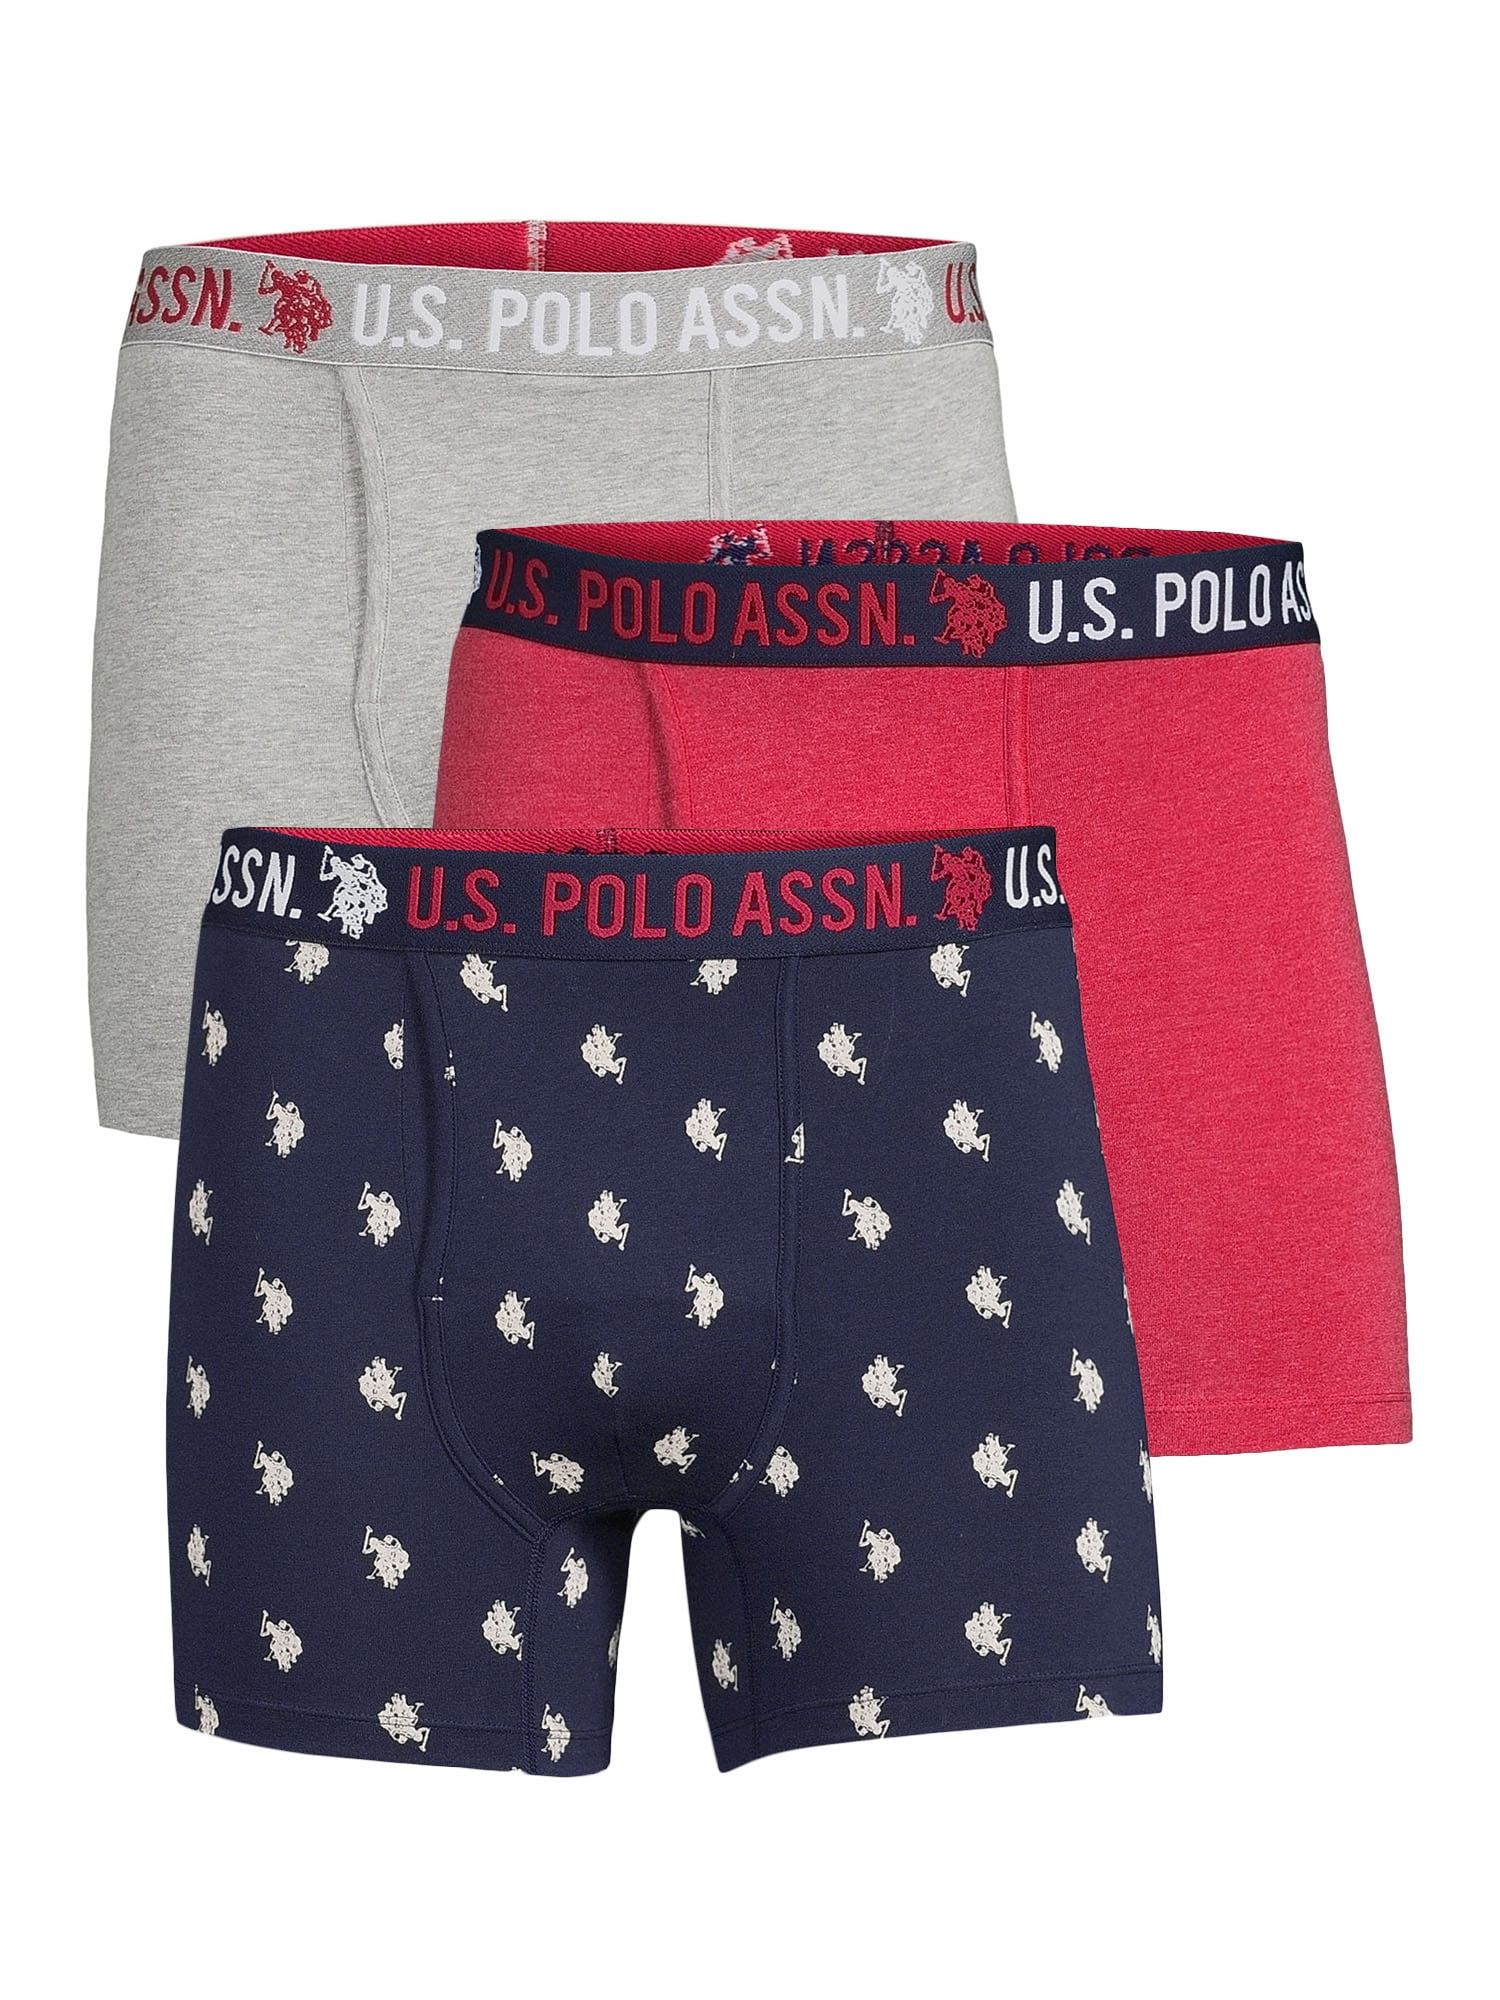 Boys Cotton Underwear Briefs 10 Pack Polo Assn U.S 